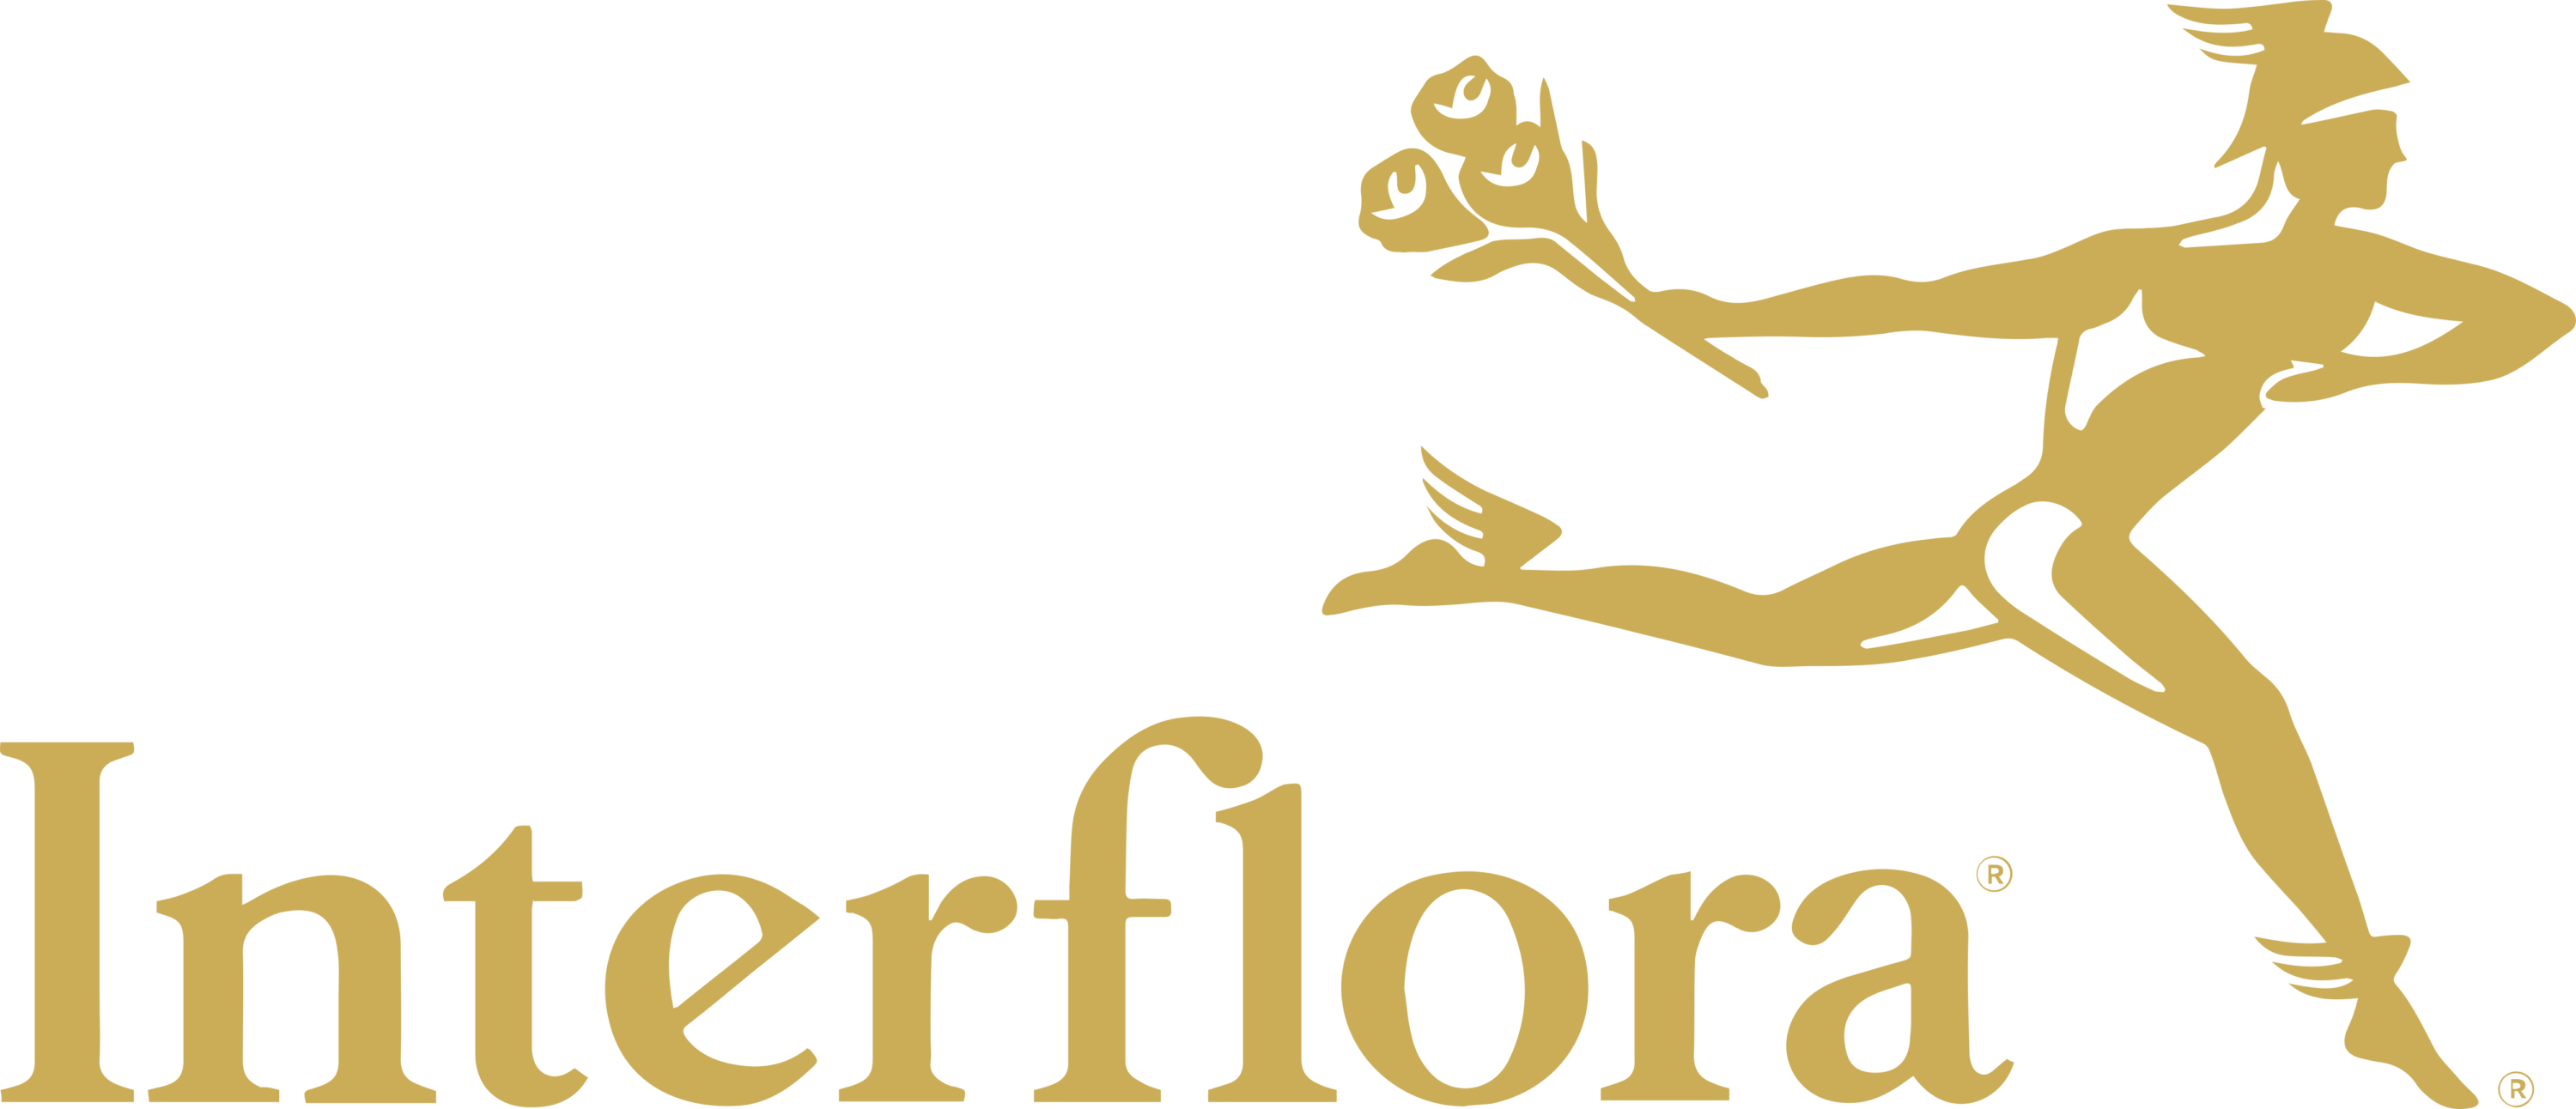 Interflora Logo